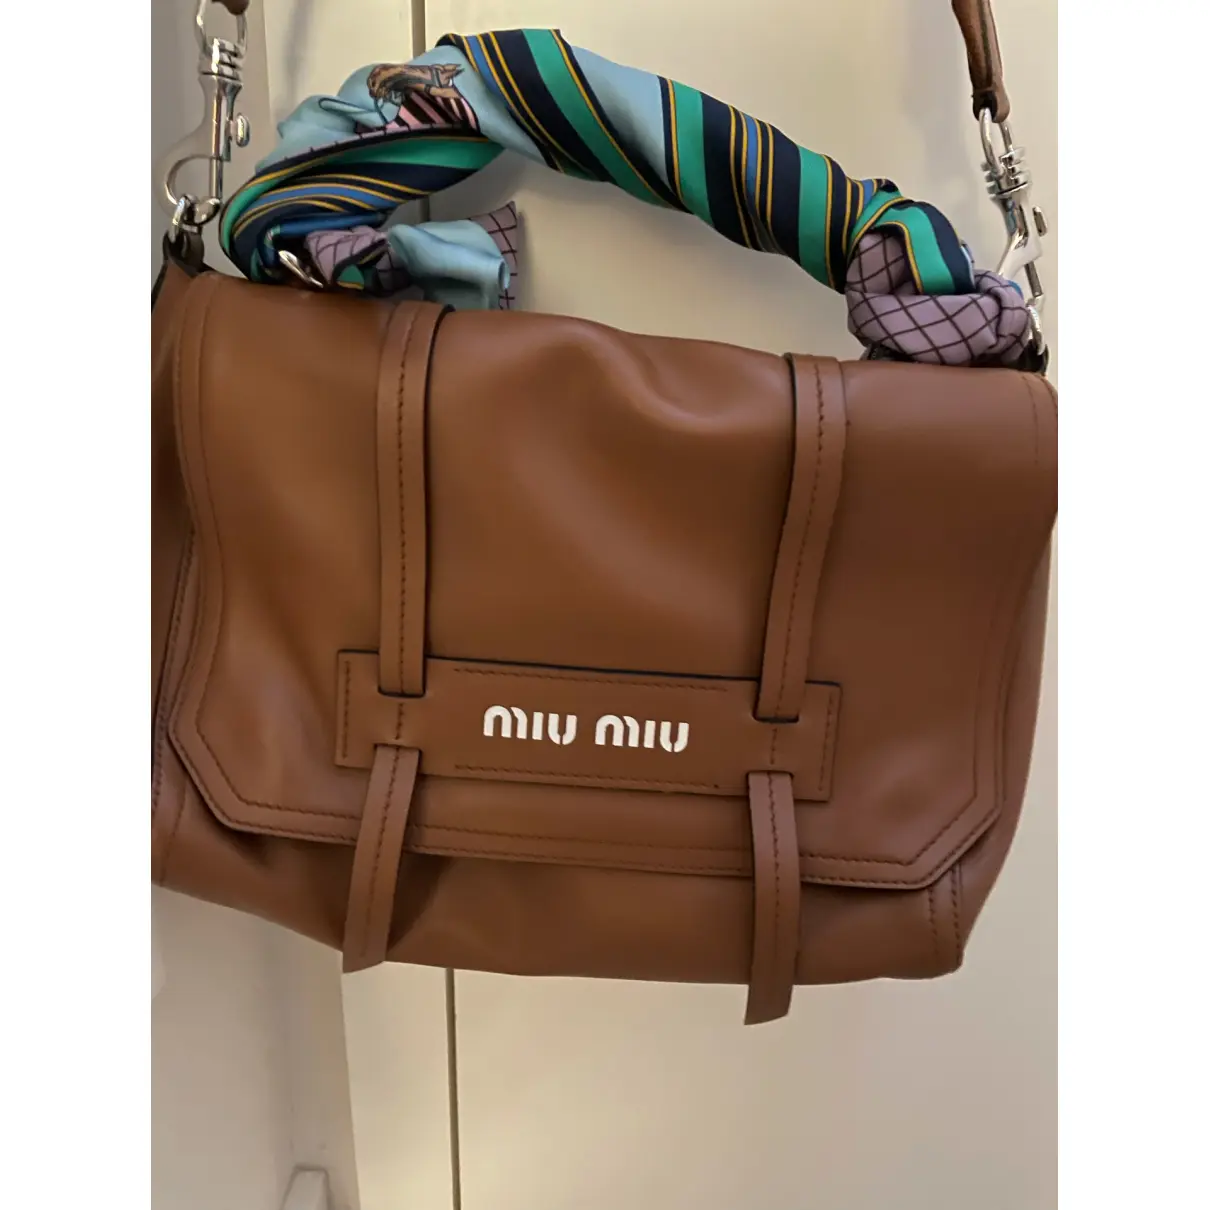 Buy Miu Miu Grace Lux leather crossbody bag online